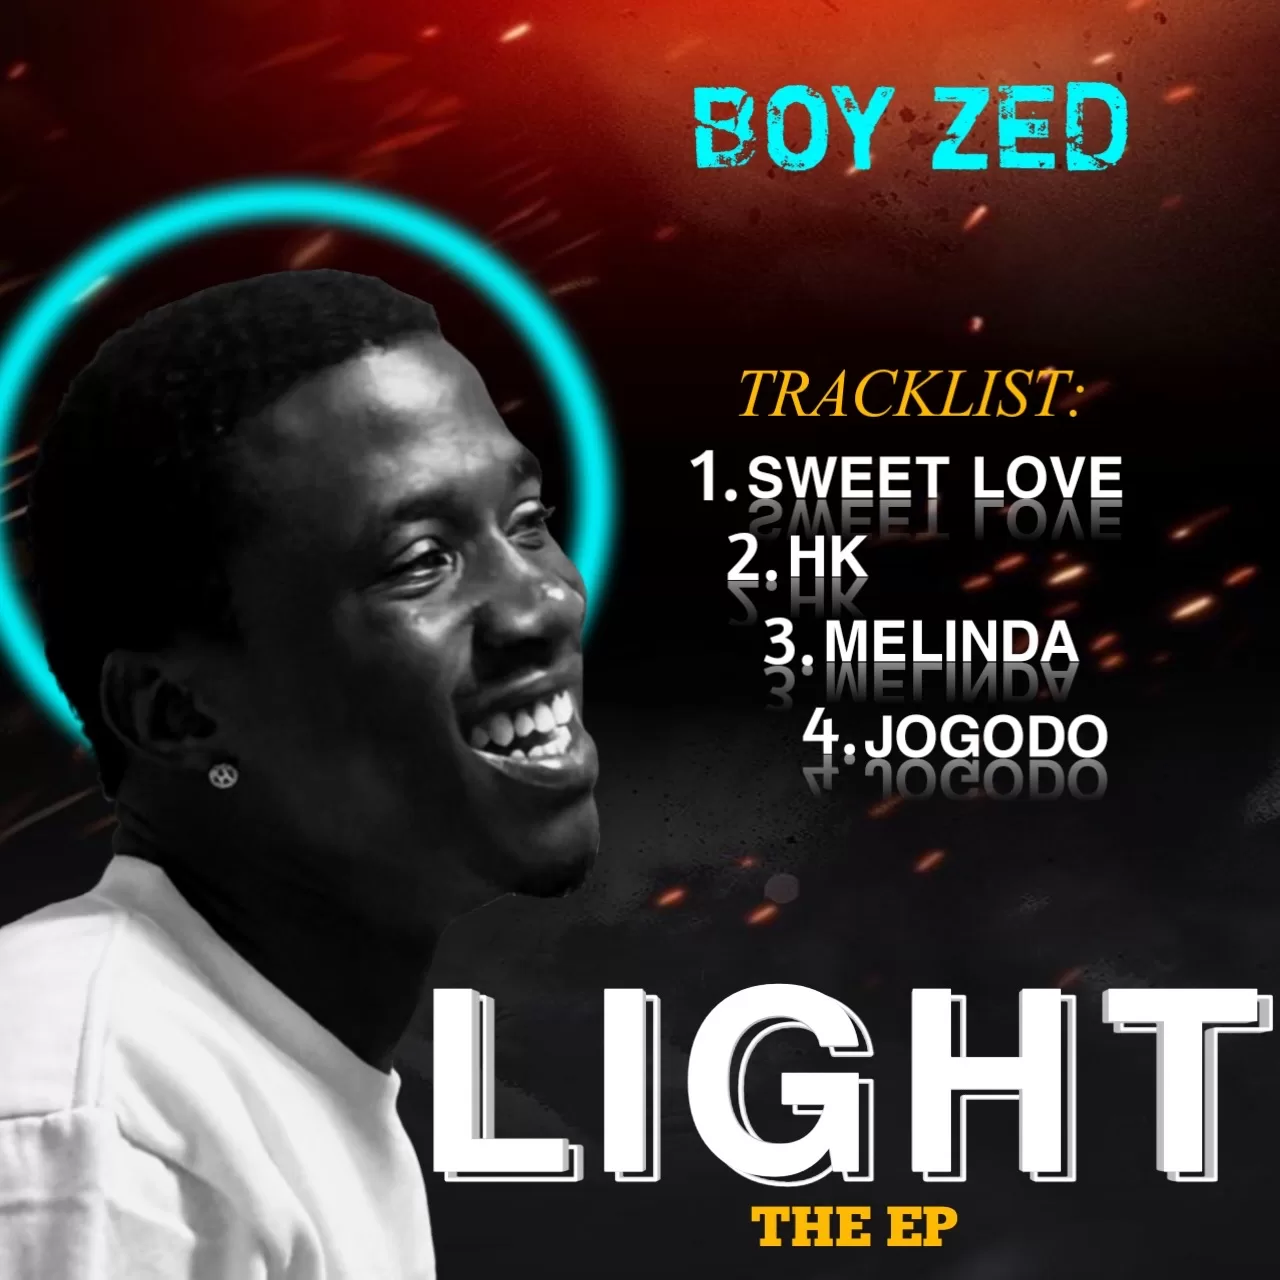 DOWNLOAD MUSIC: Boy Zed – LIGHT EP